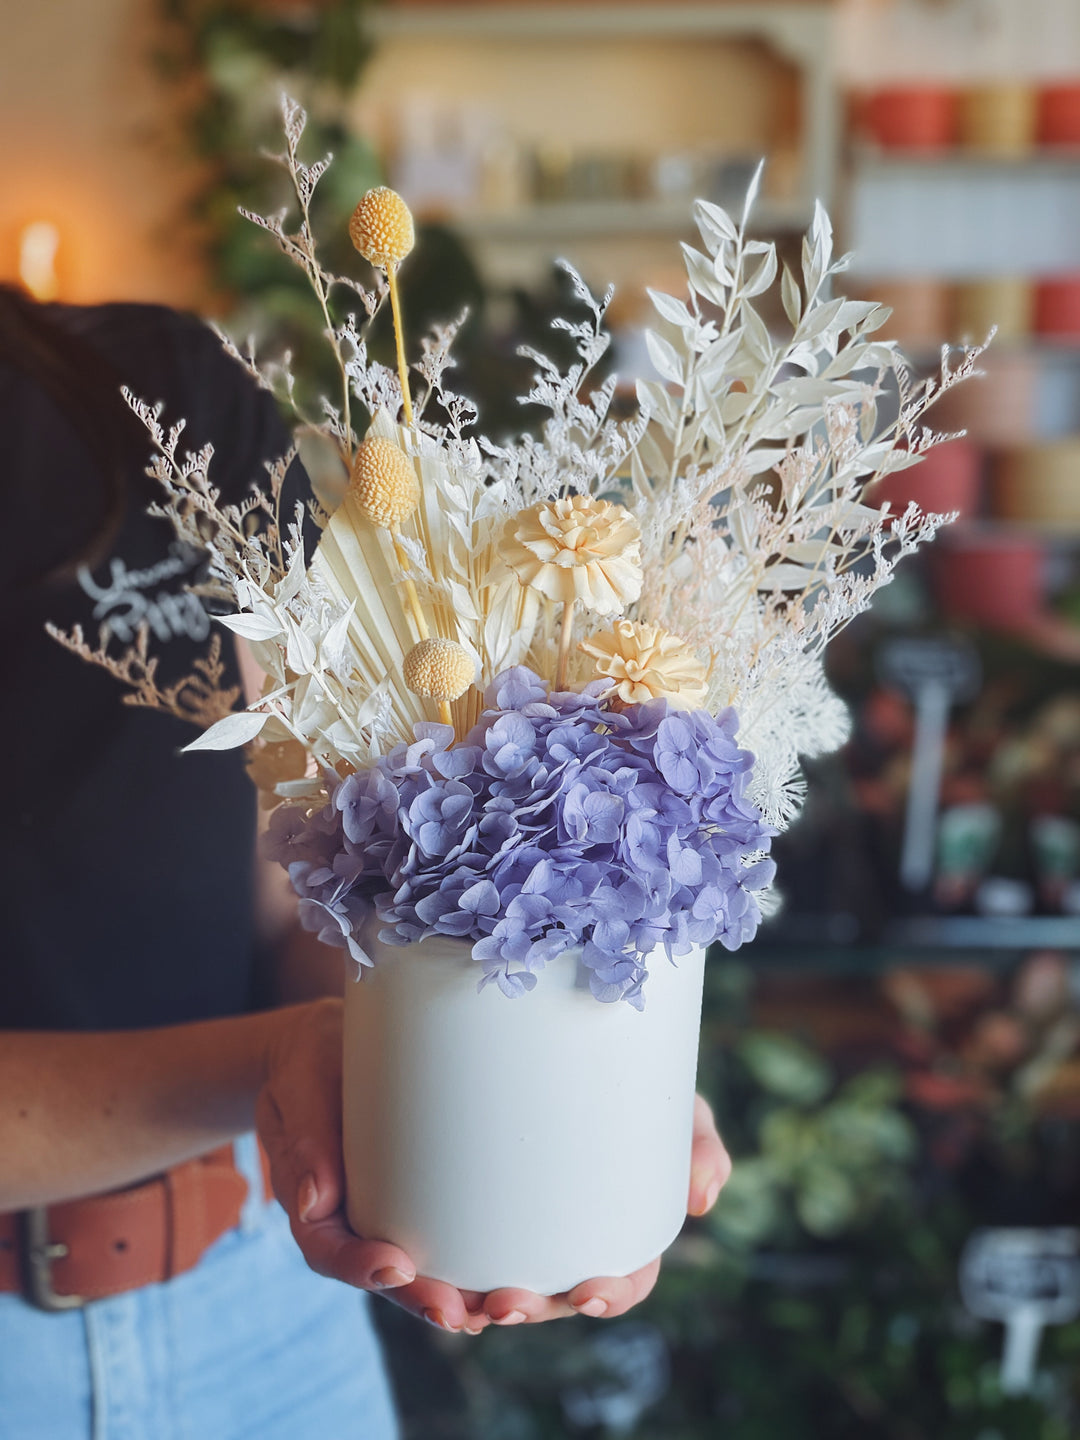 "Light & Lavender" Dried Flower Arrangement